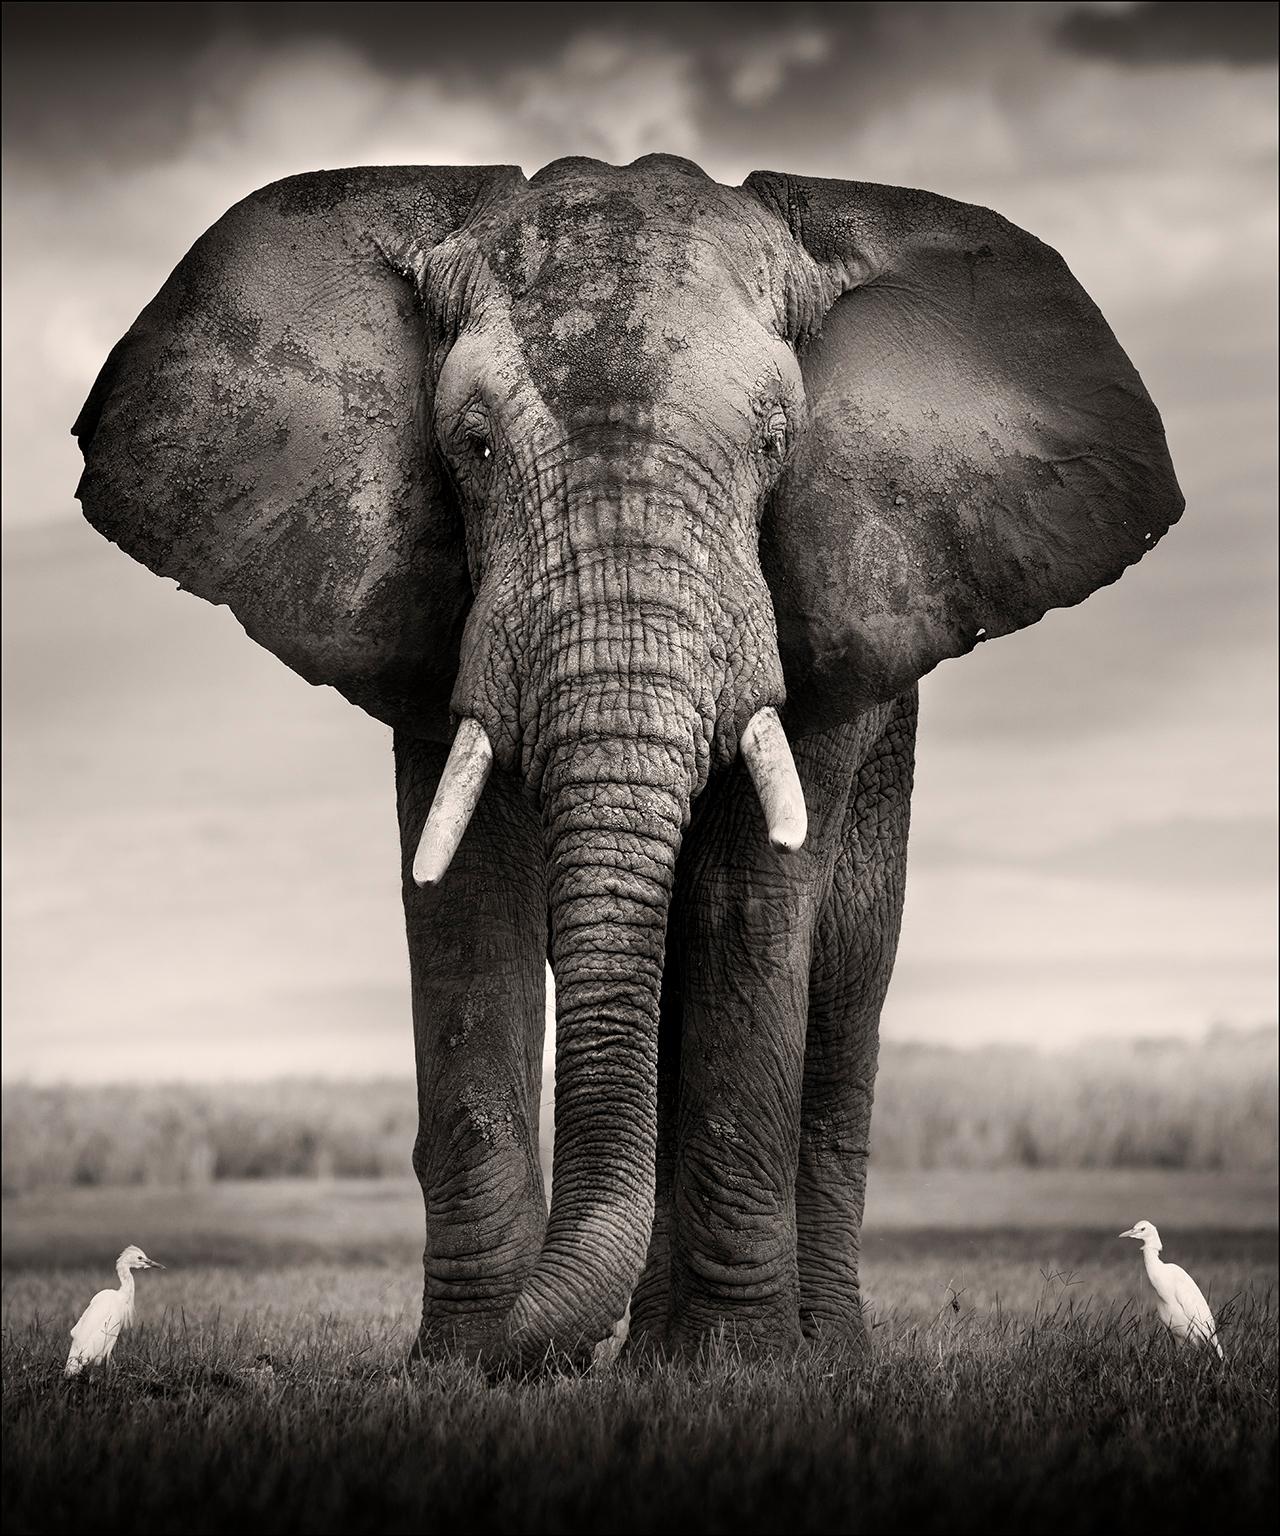 Joachim Schmeisser Black and White Photograph - Elephant Bull with two birds, animal, wildlife, black and white photography